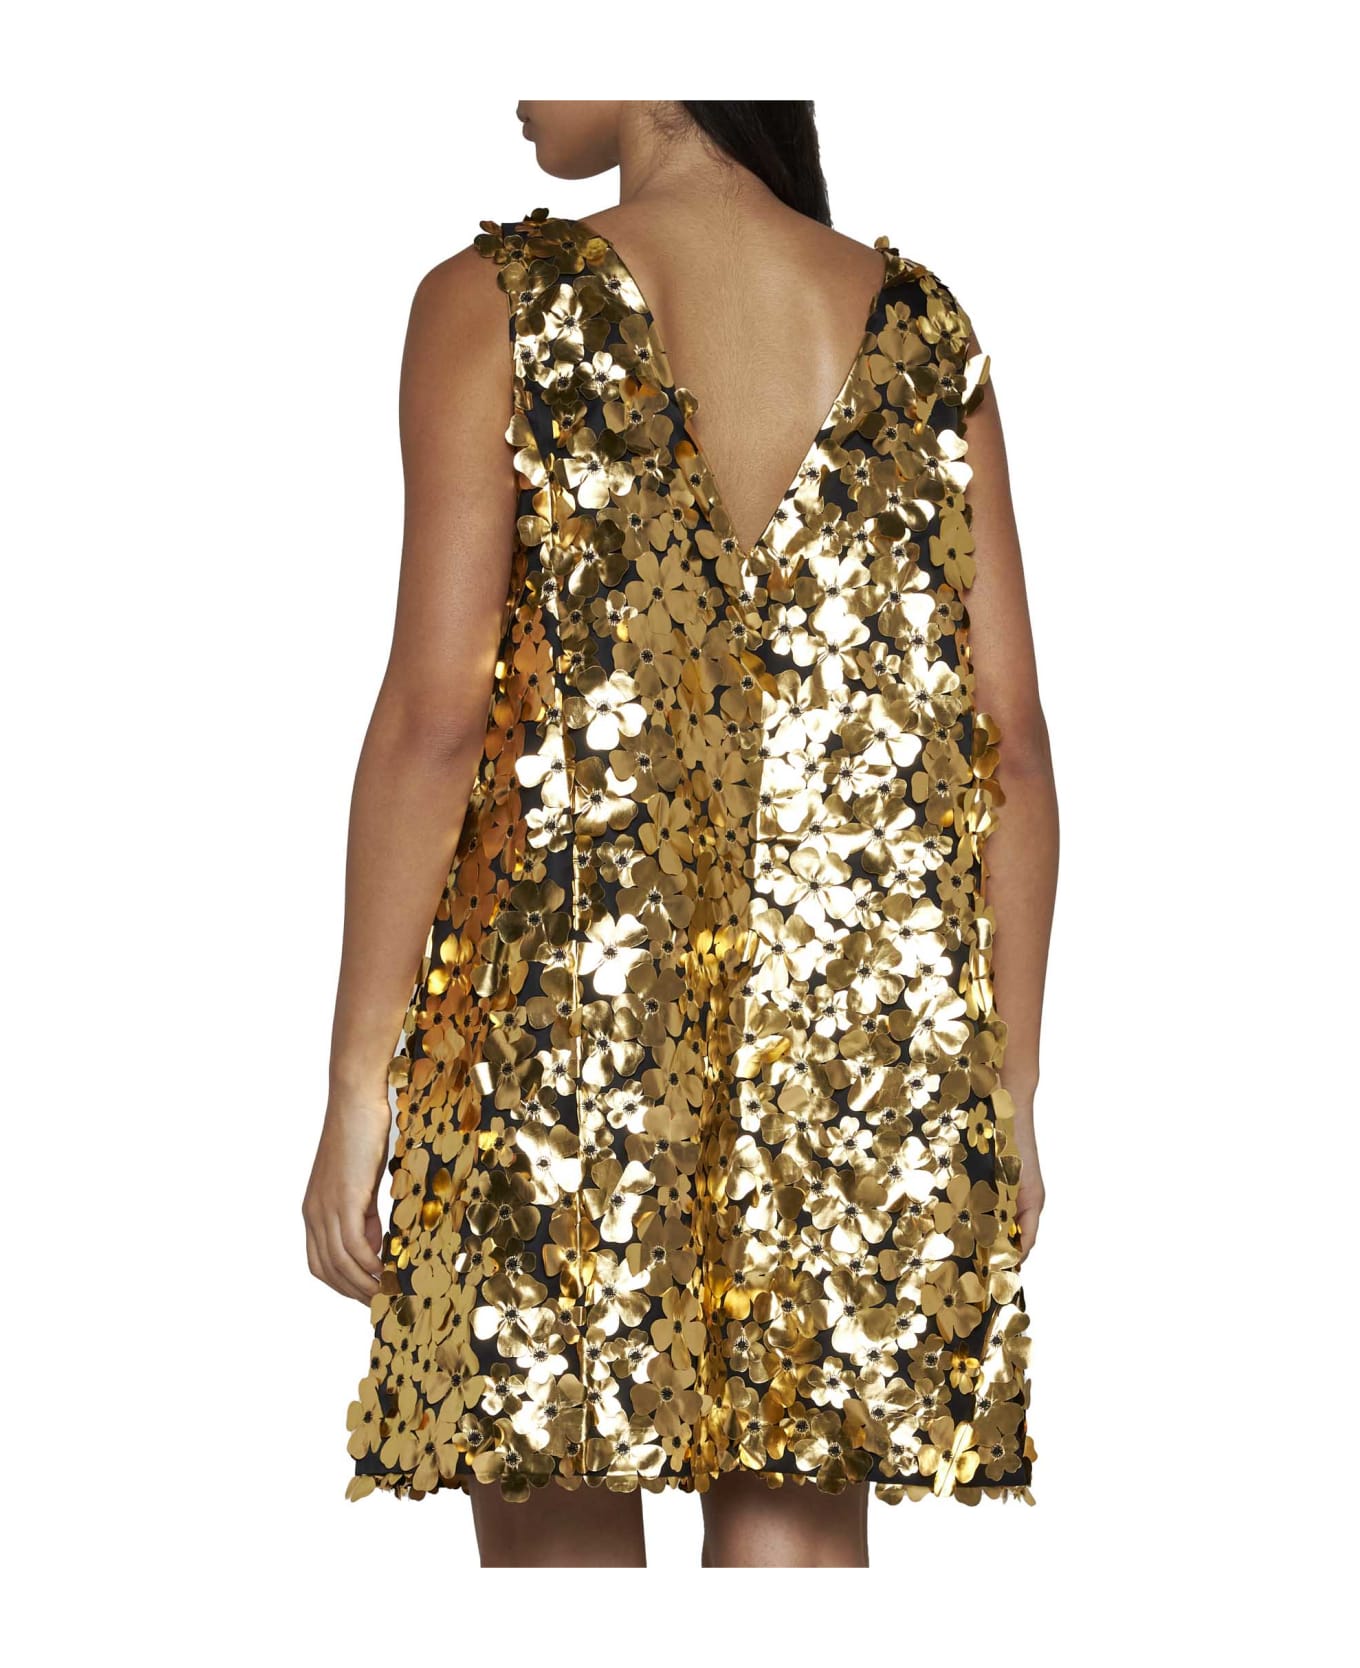 Stine Goya Dress - Golden metallic 3d flowers